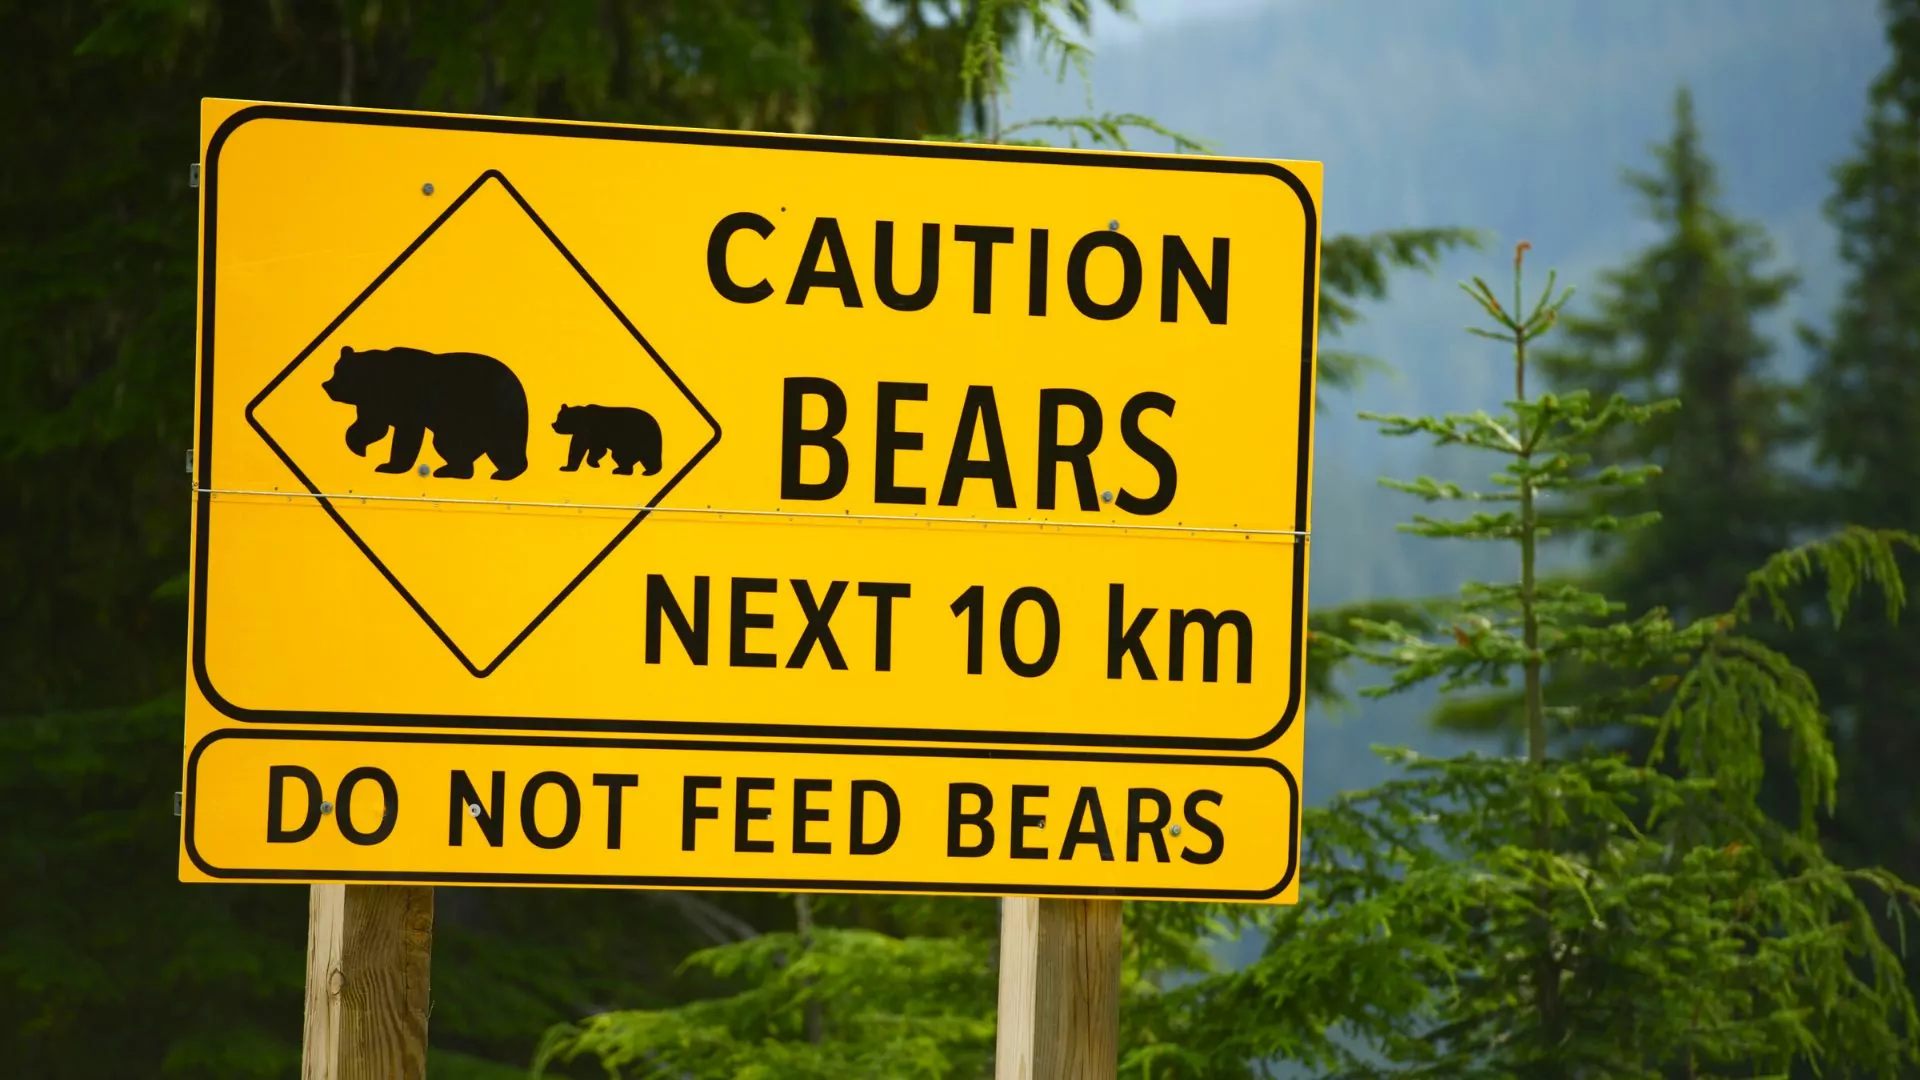 Bear safety sign